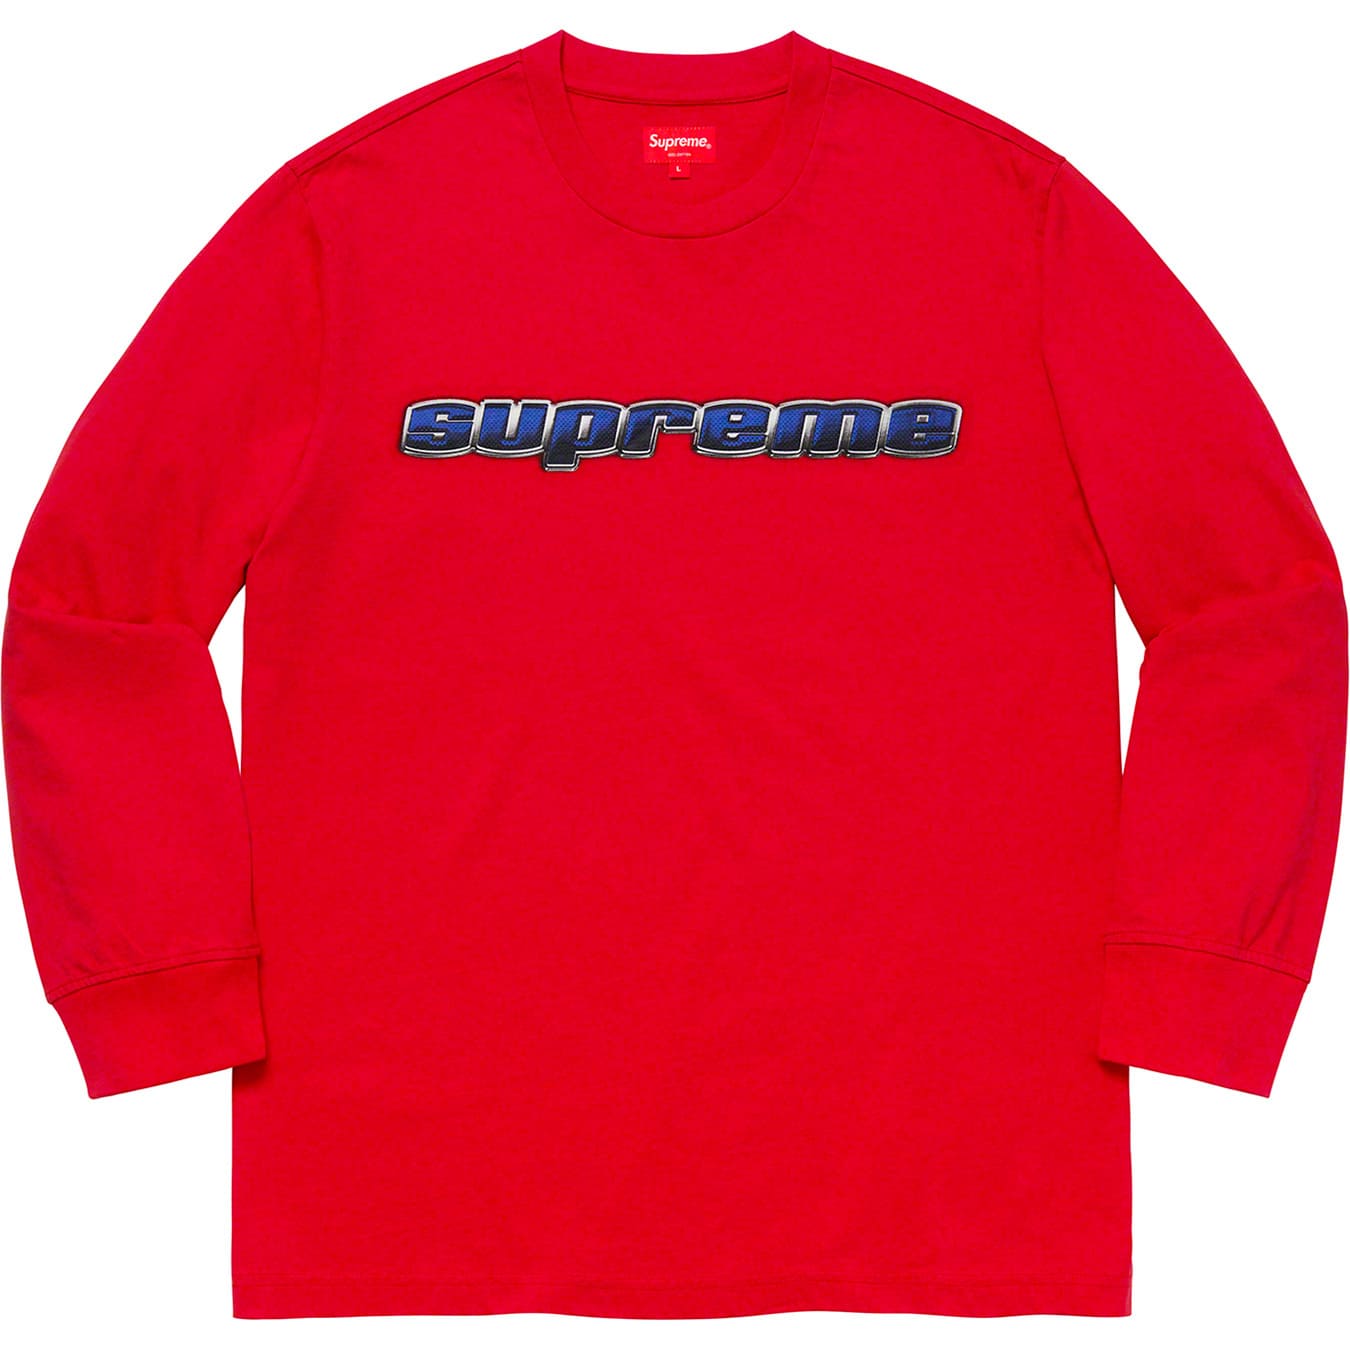 Supreme Chrome Logo L/S Top